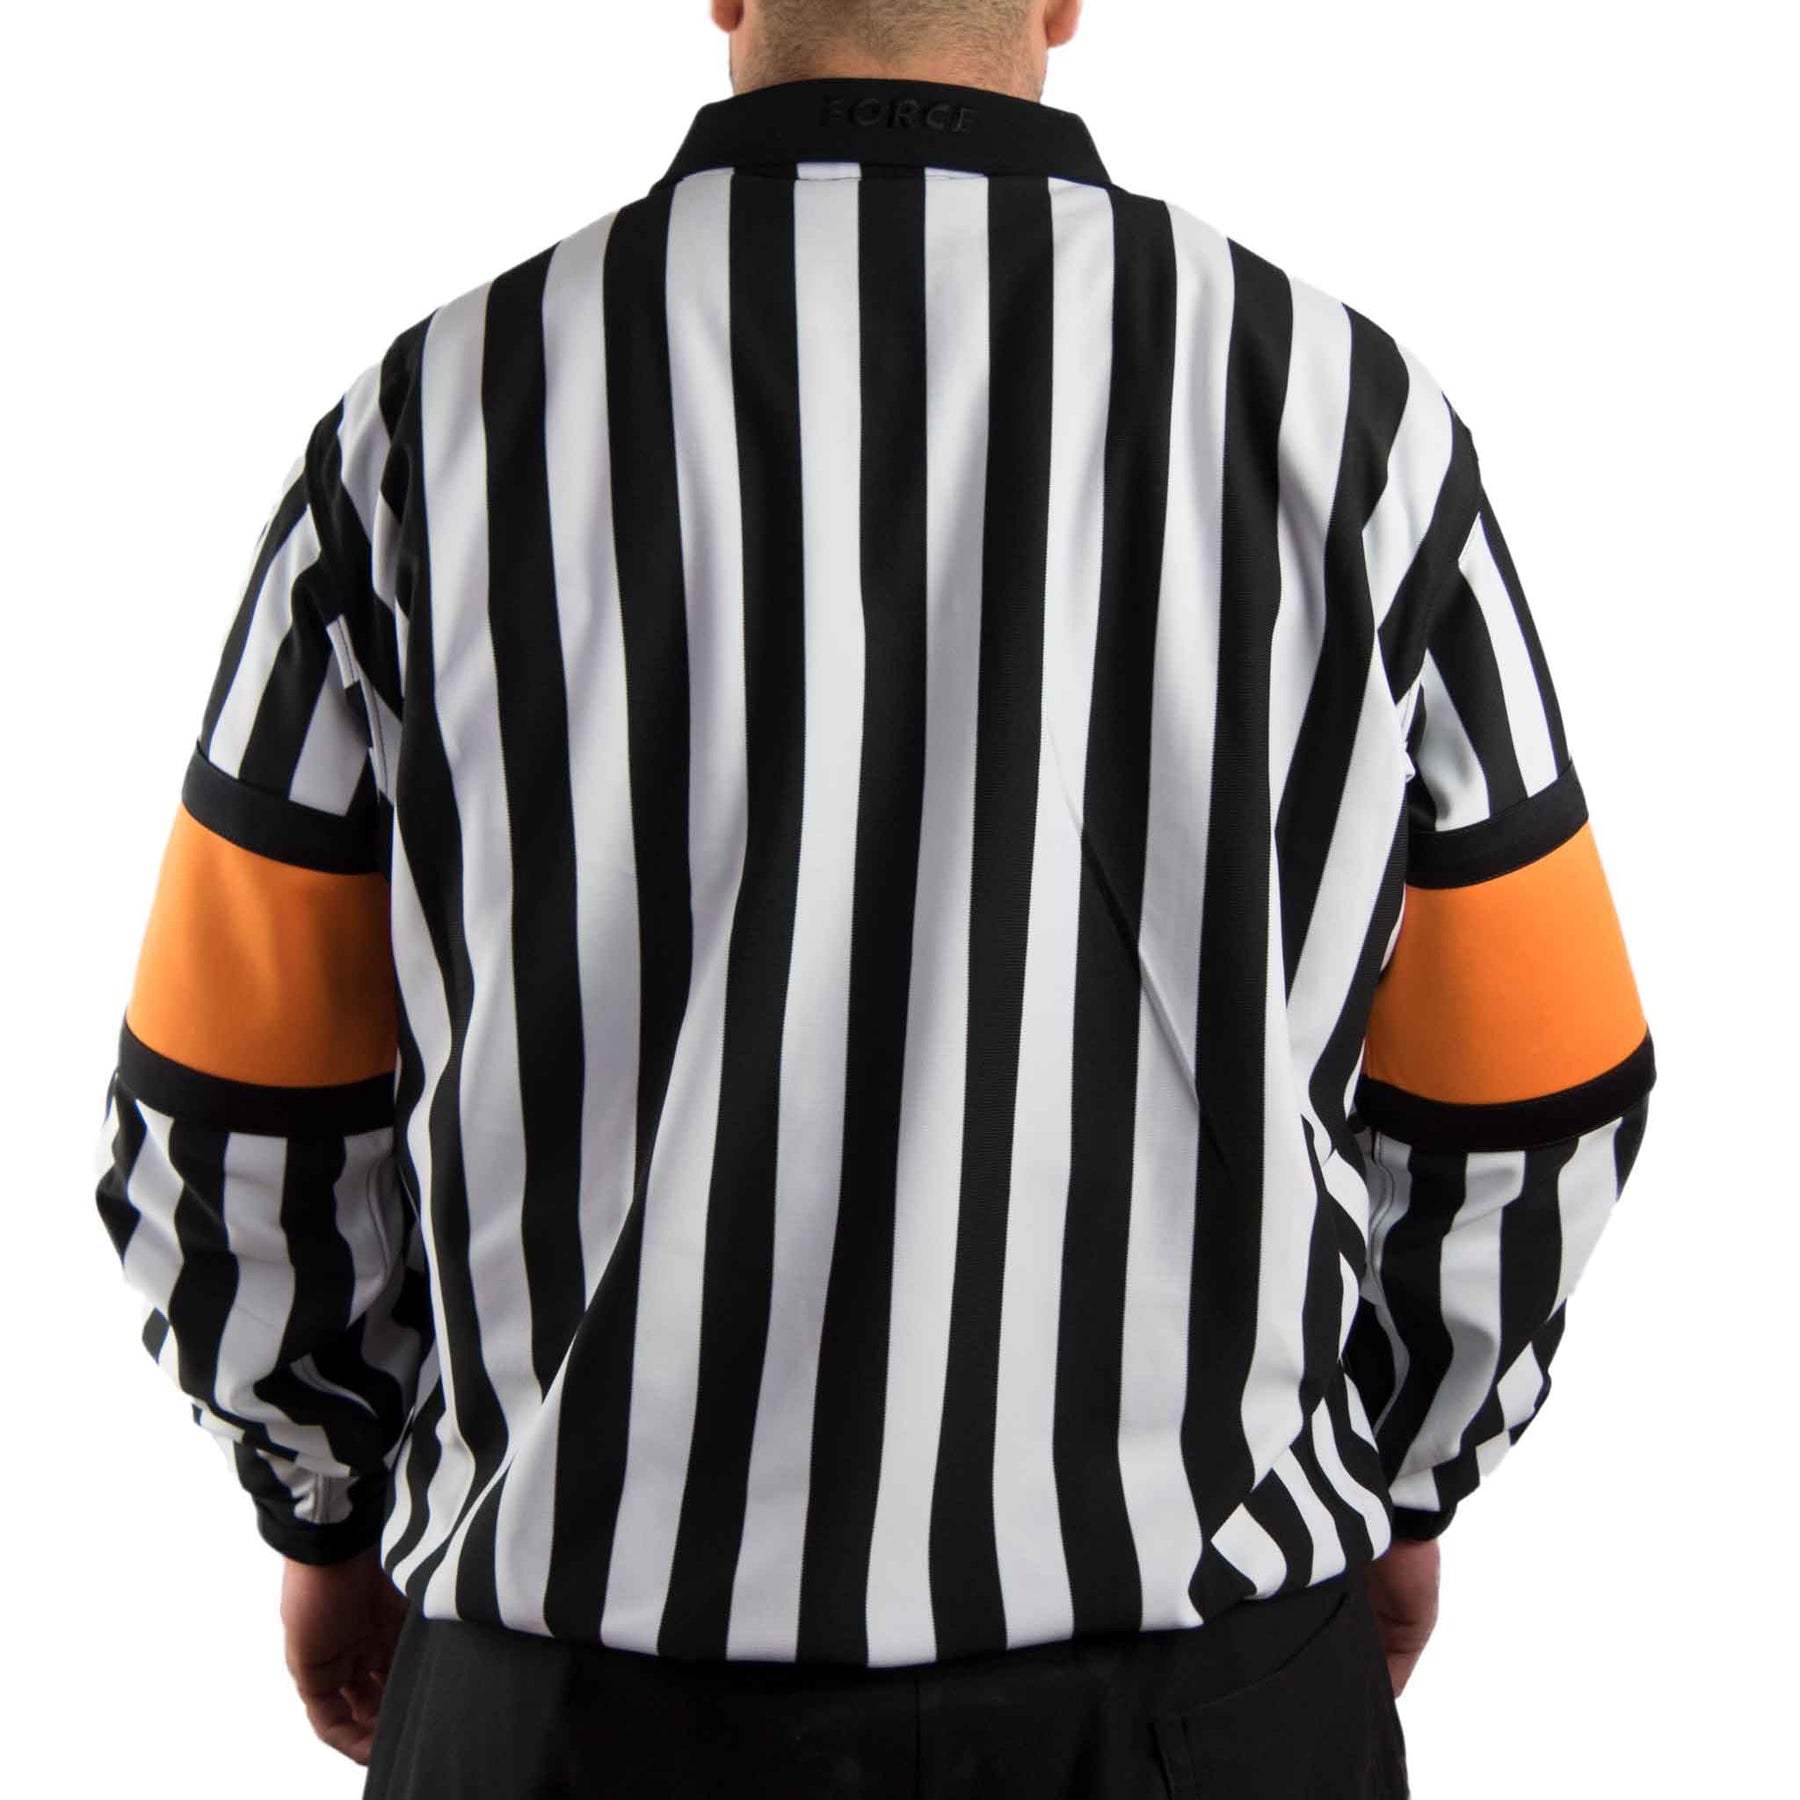 Hockey Ref Shop Original QuickFlip Reversible Referee to Linesman Sweater/Jersey X-Large / Orange Bands